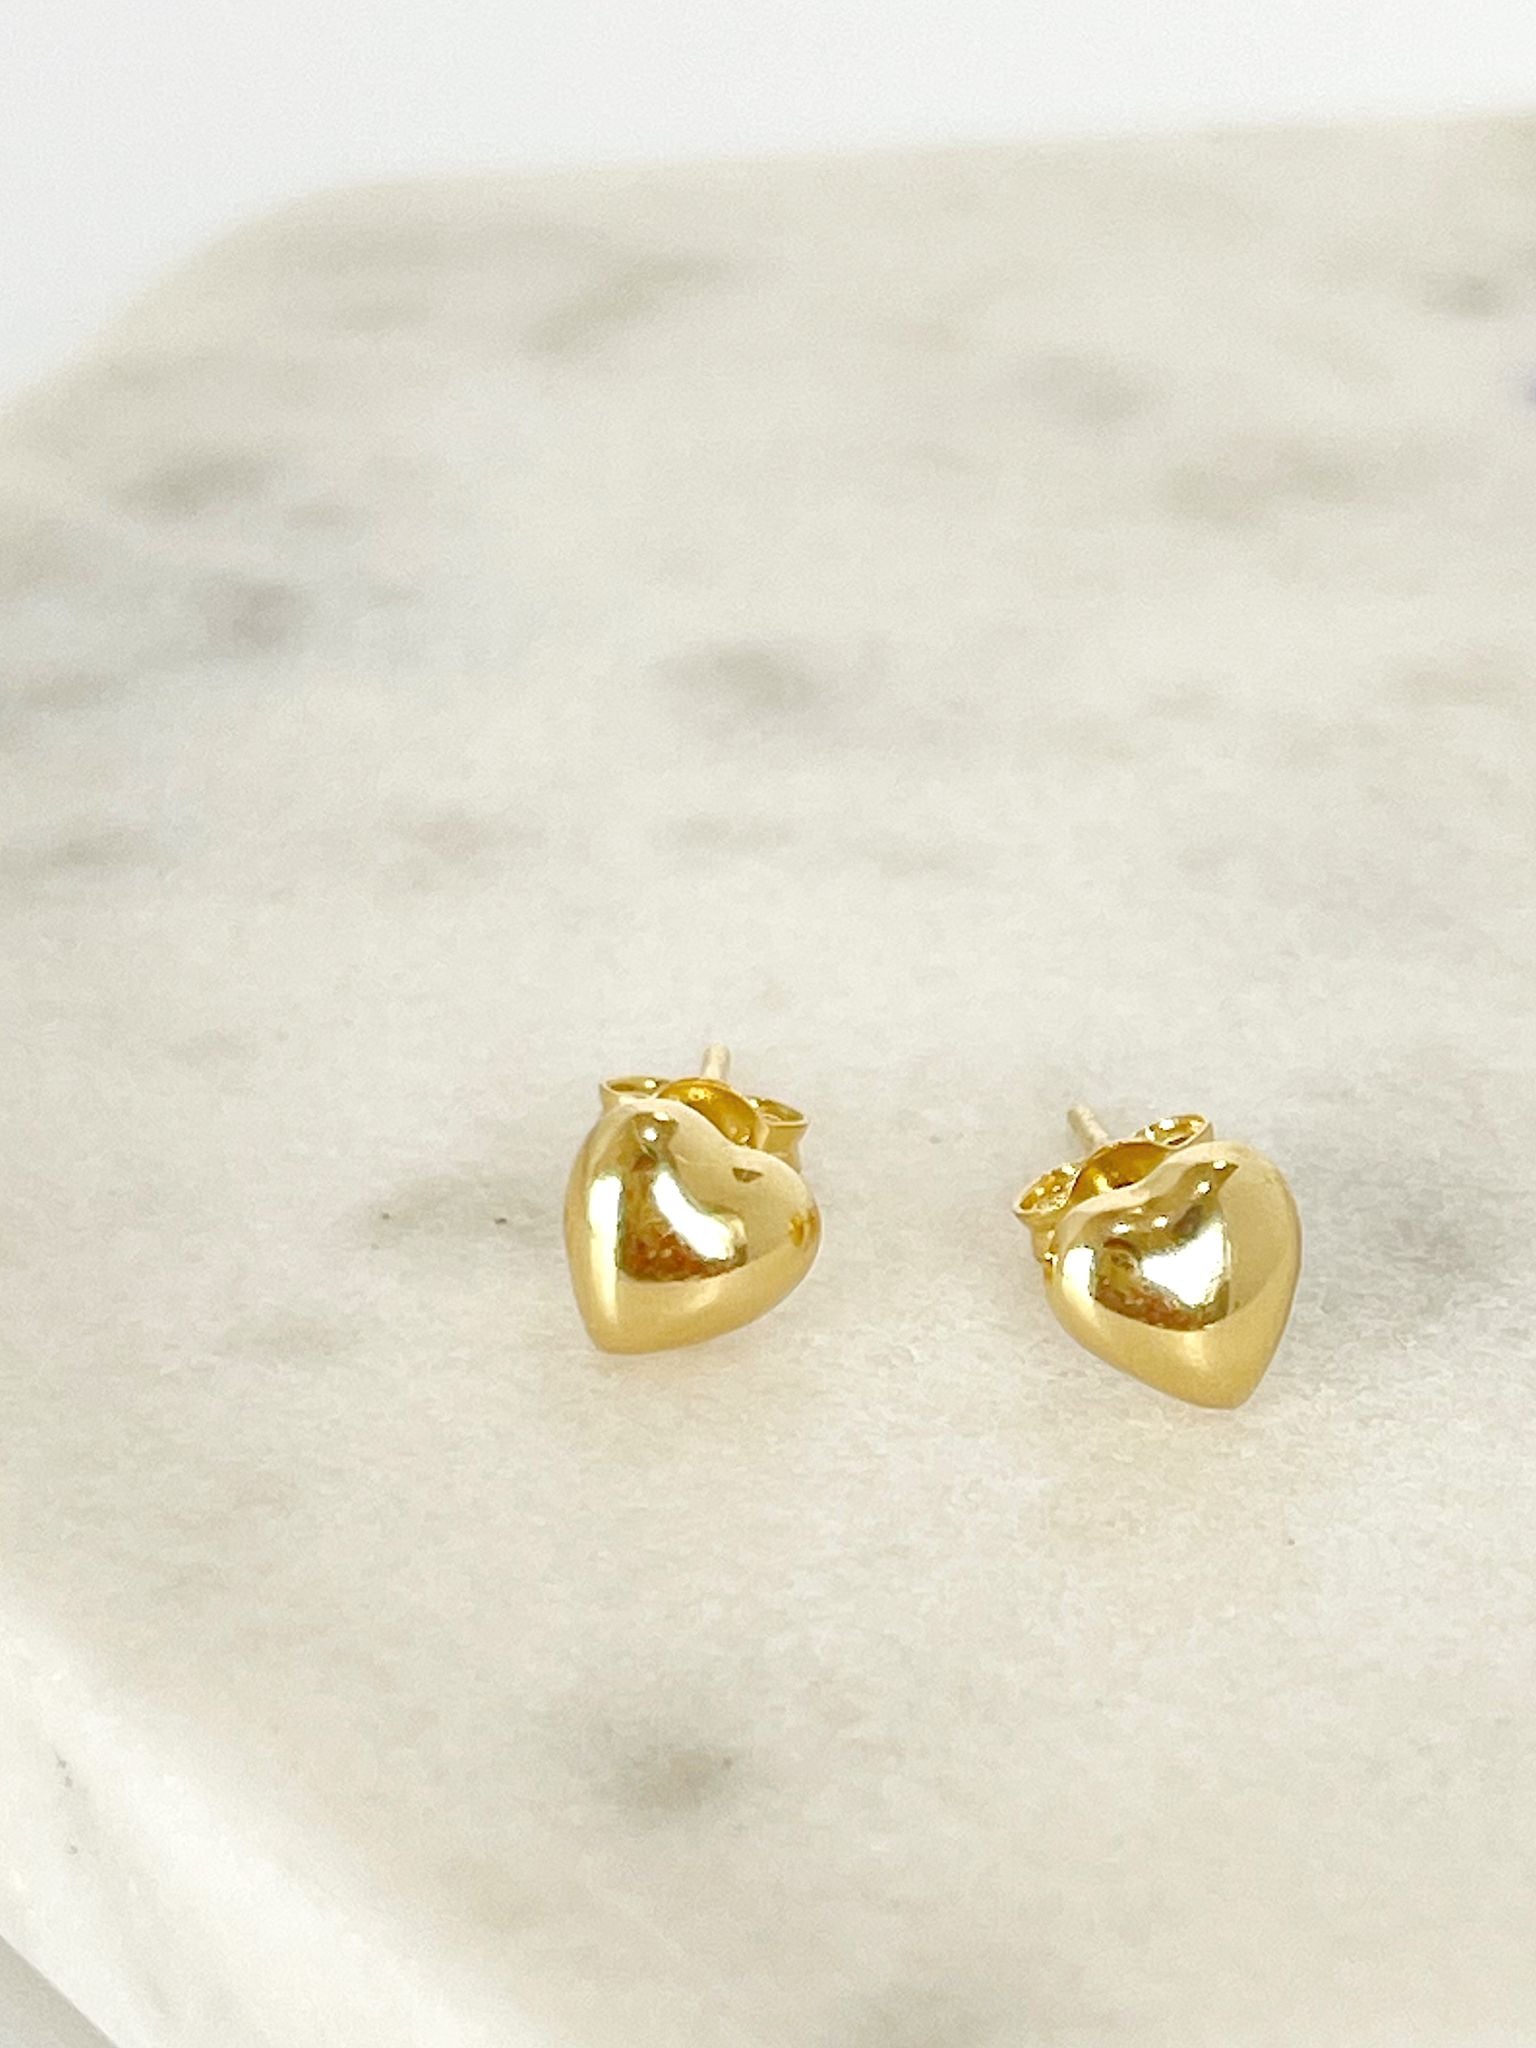 Princess gold earrings